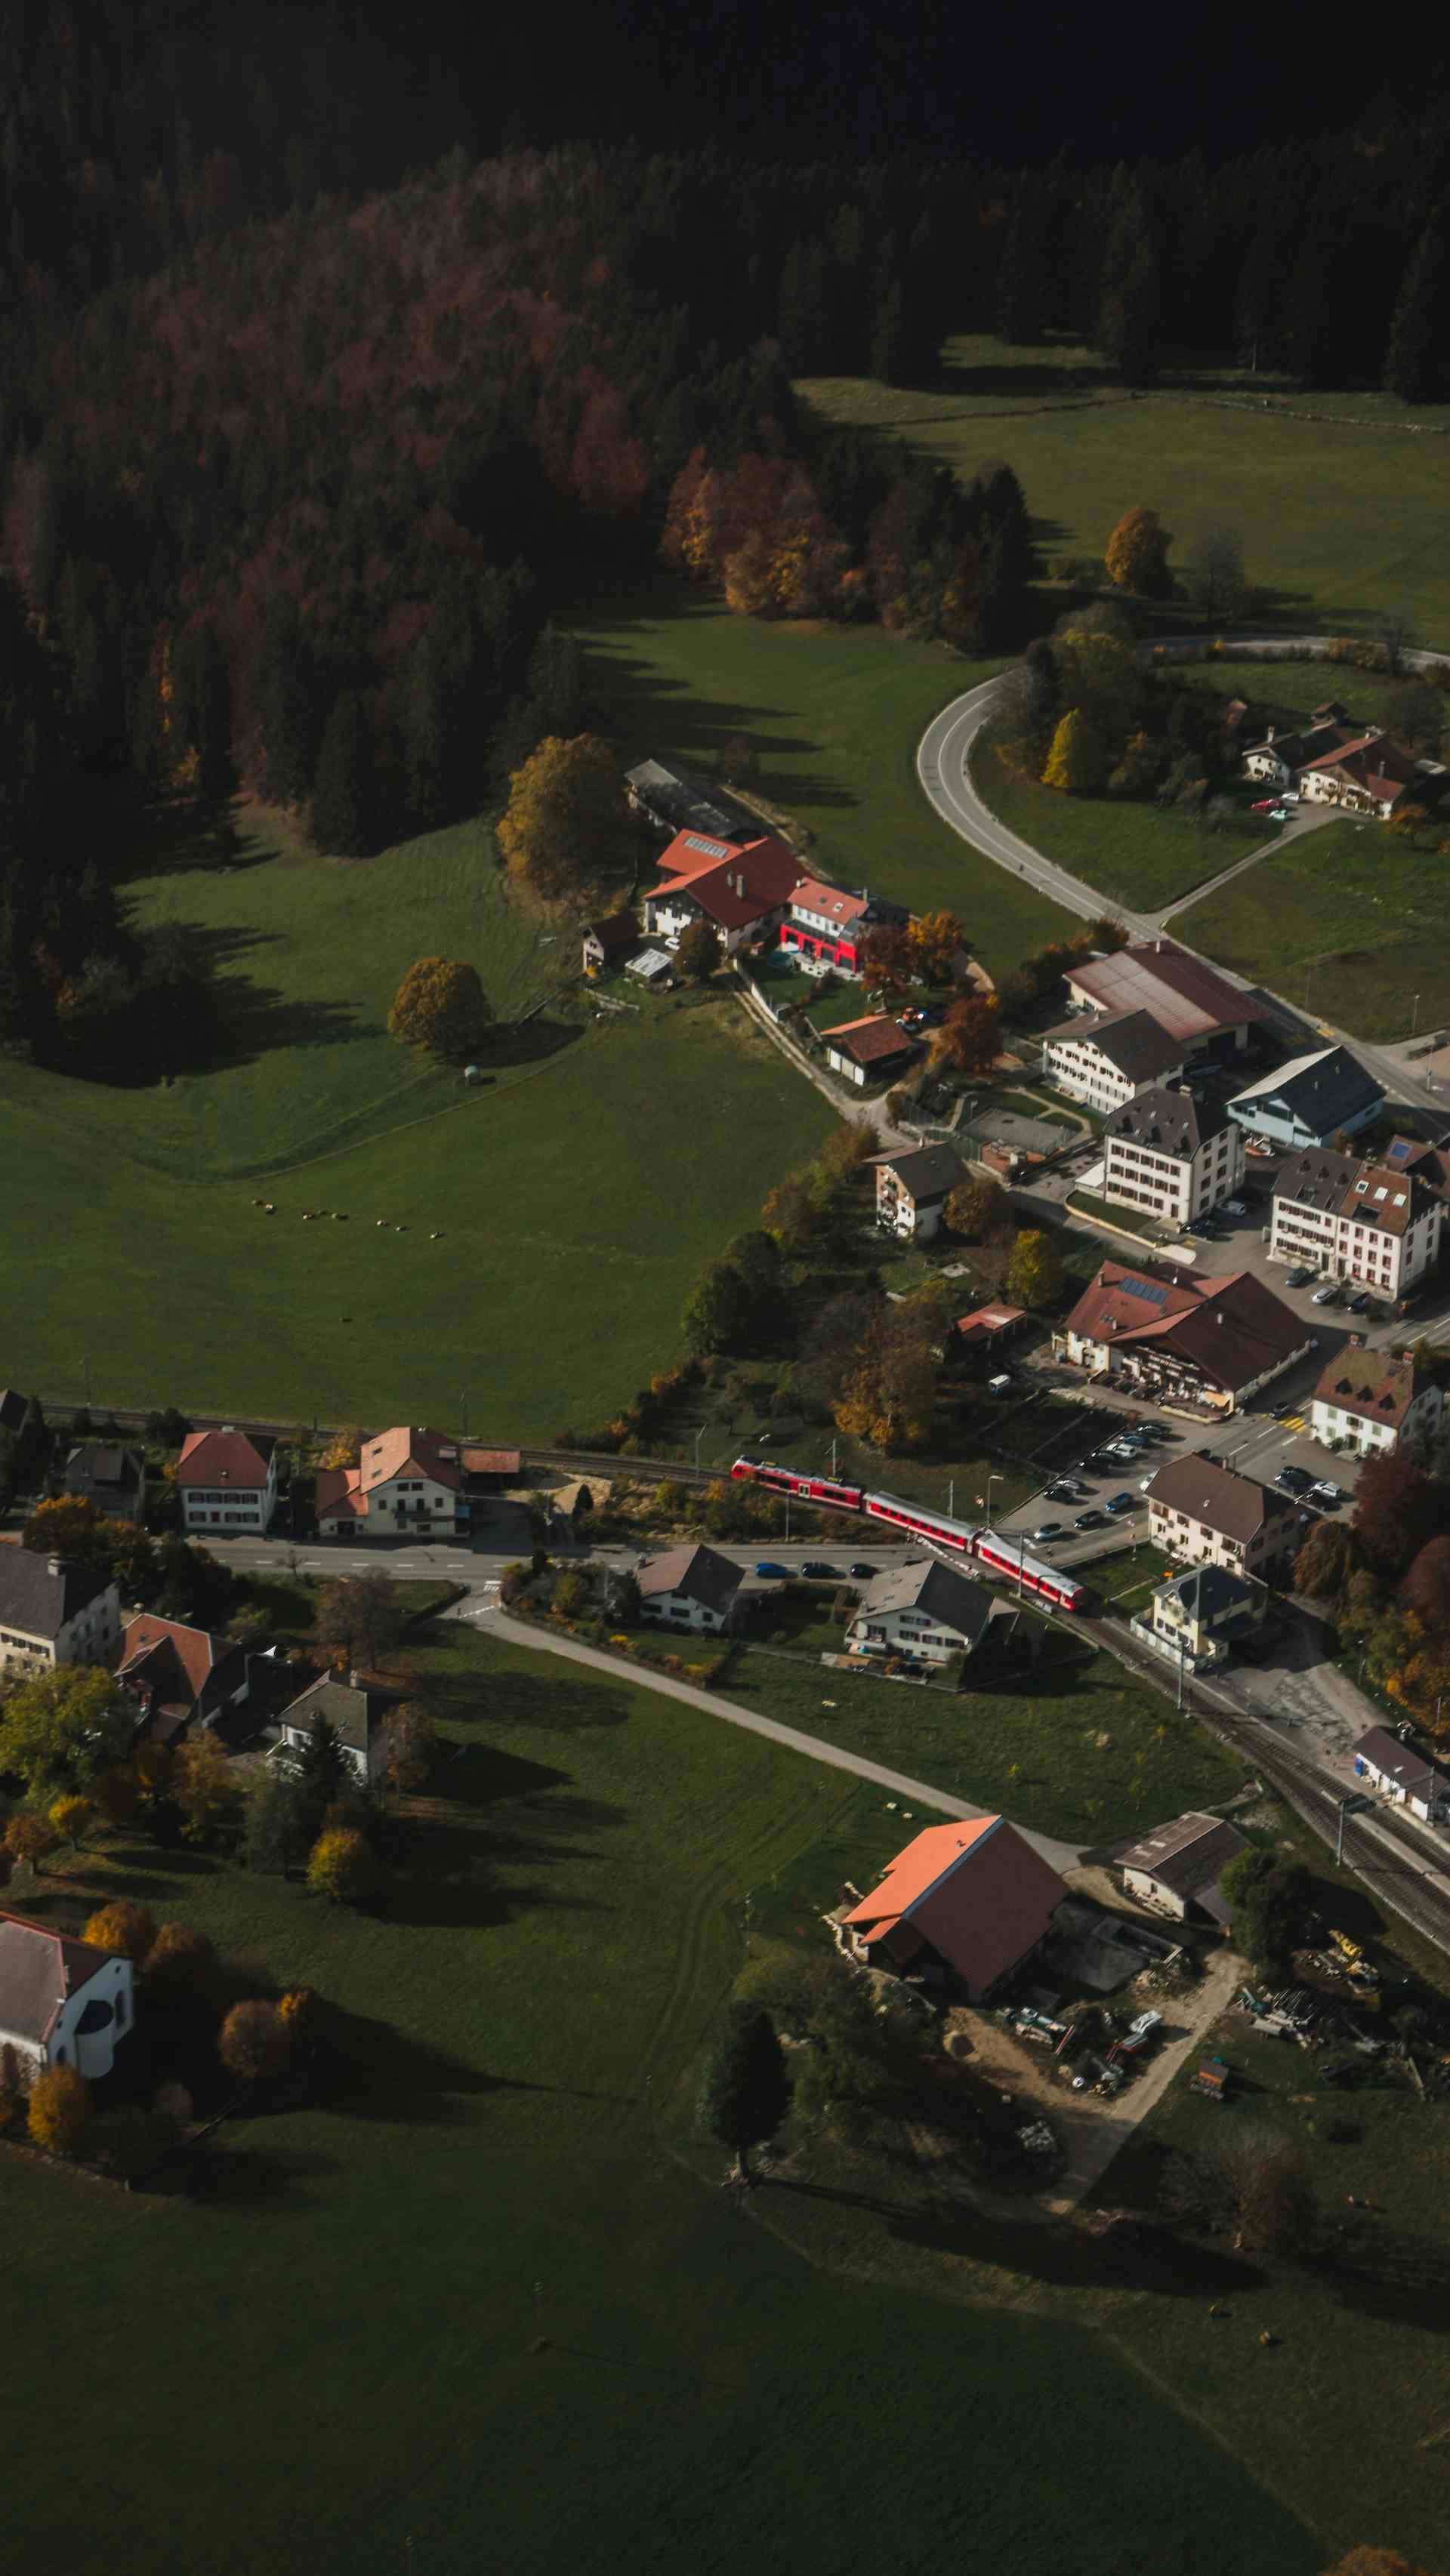 Famille Meister, vente de viande à la ferme, Produzent in Le Noirmont Kanton Schwören in der Schweiz